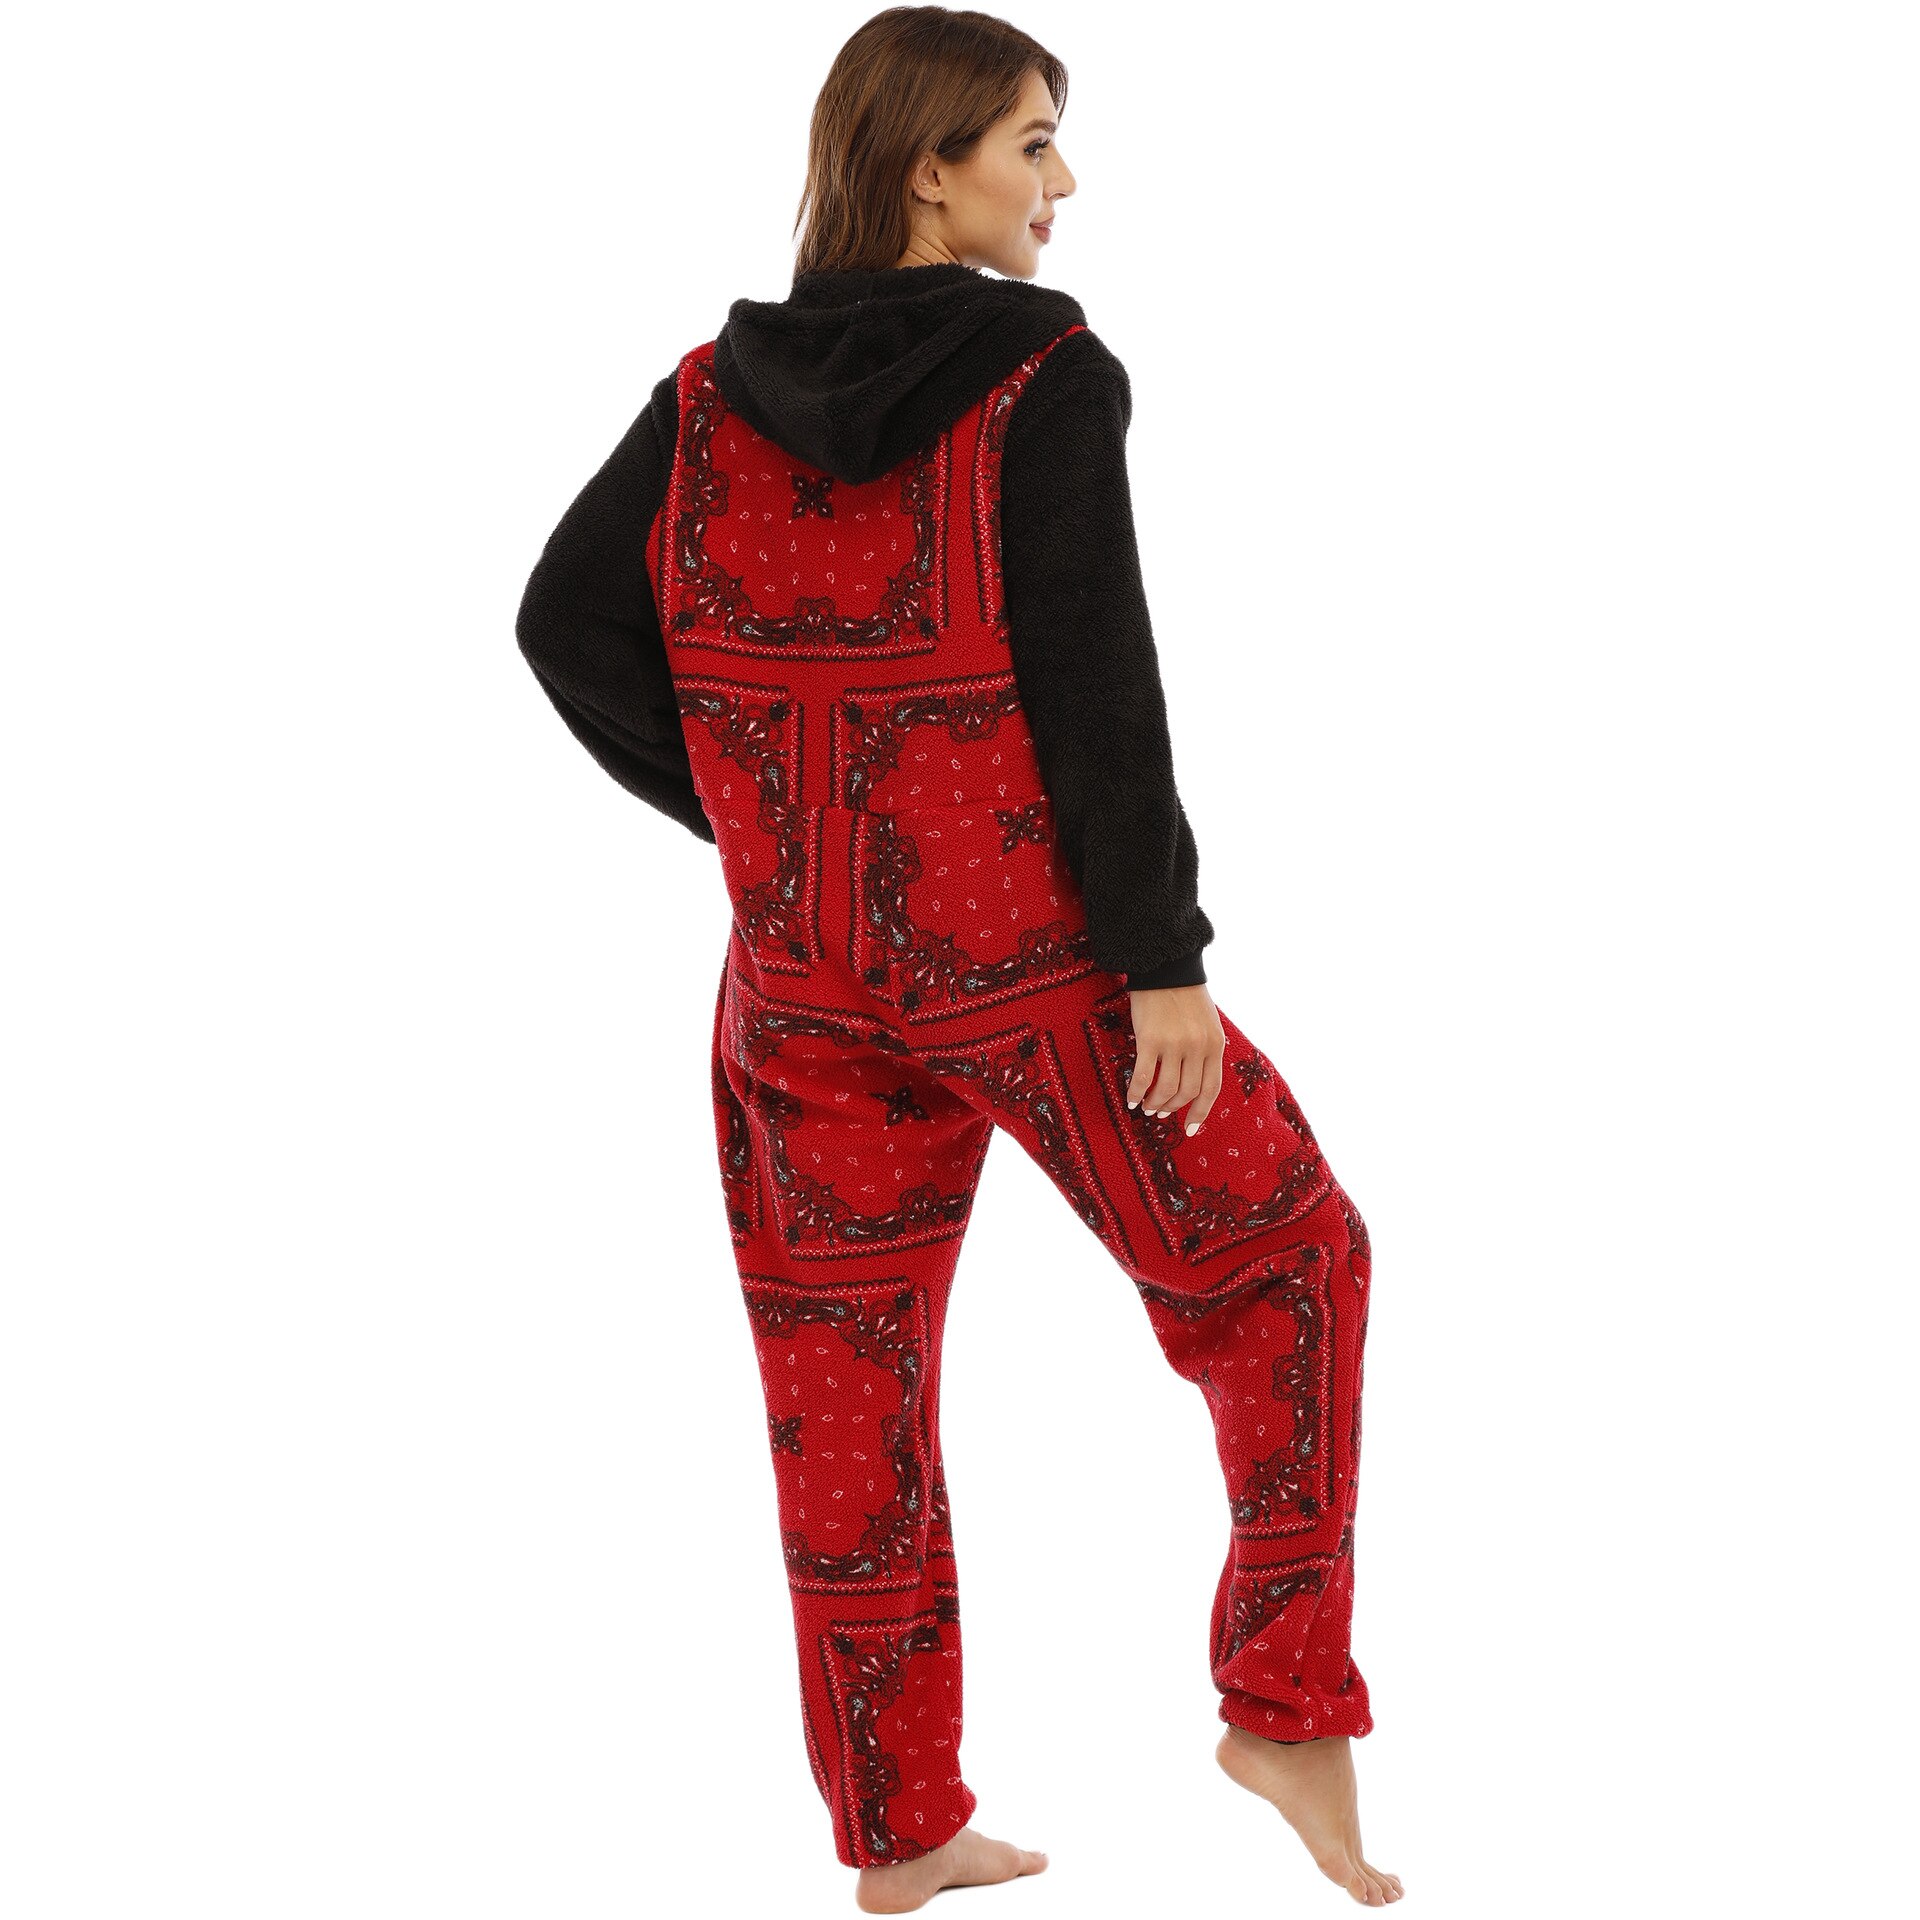 Women Jumpsuit Sleepwear Stripe Zipper Hooded Onesies Christmas New Year Pajamas Winter Long Sleeve Romper Female Nightwear